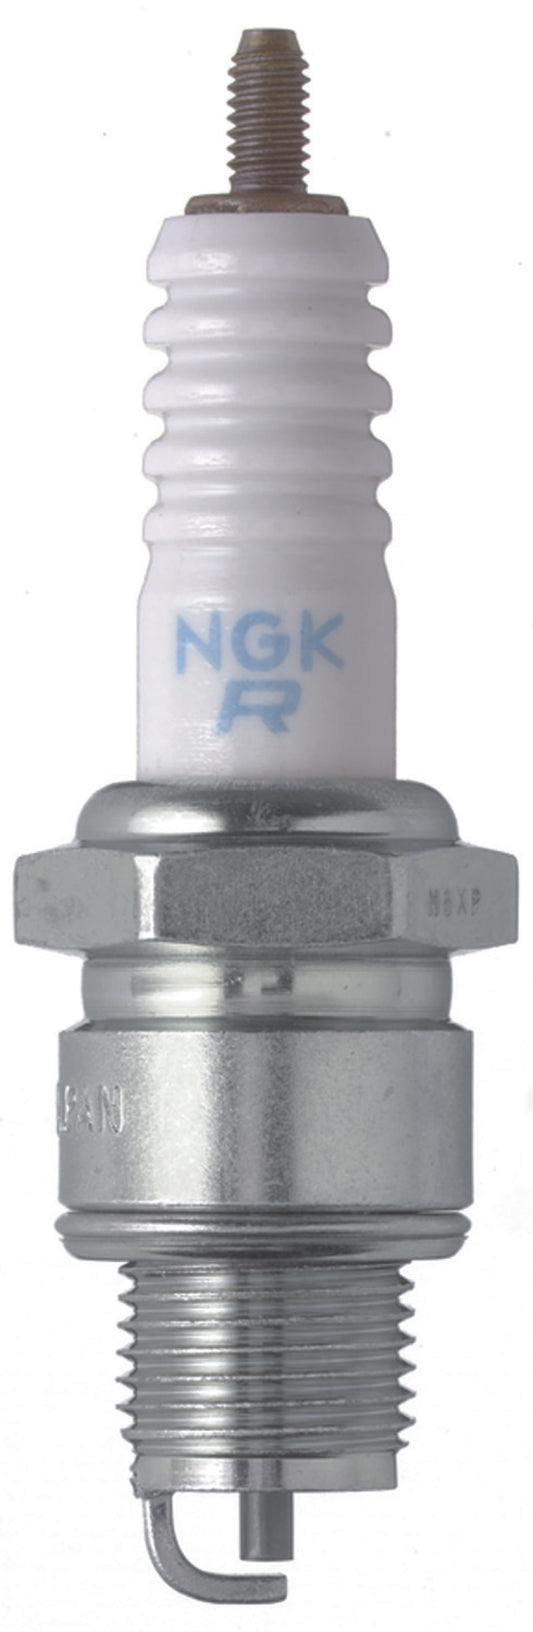 NGK Standard Spark Plug Box of 10 (BR6HSA)